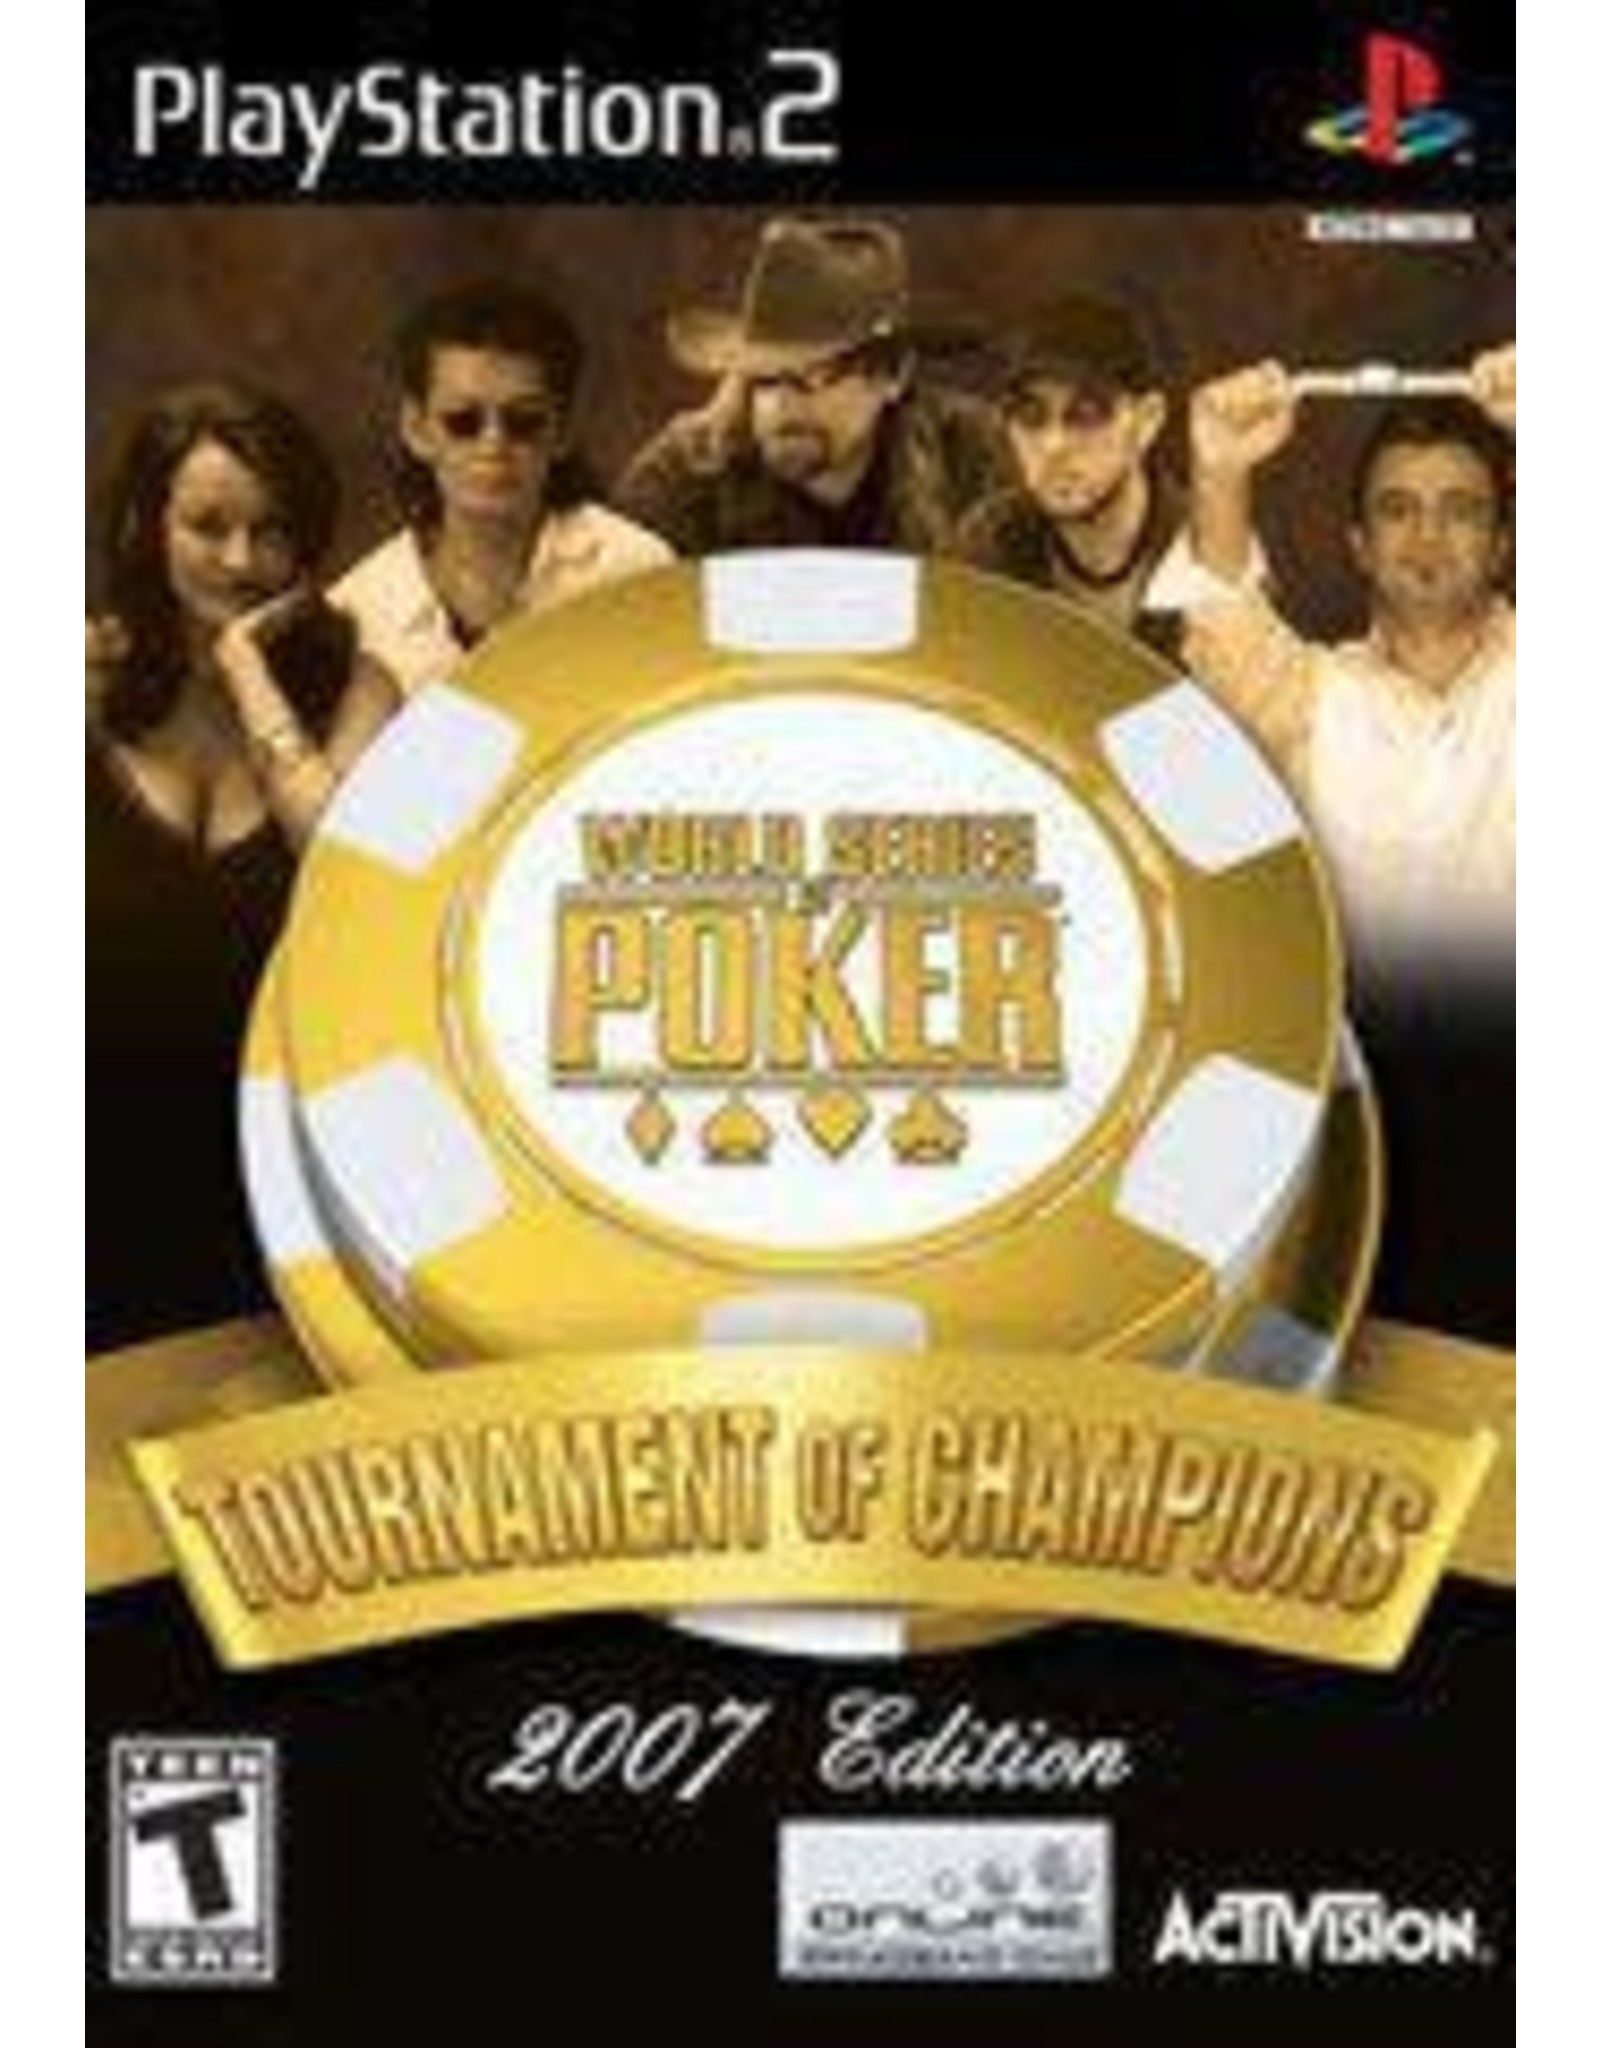 Playstation 2 World Series of Poker Tournament of Champions 2007 (CiB)